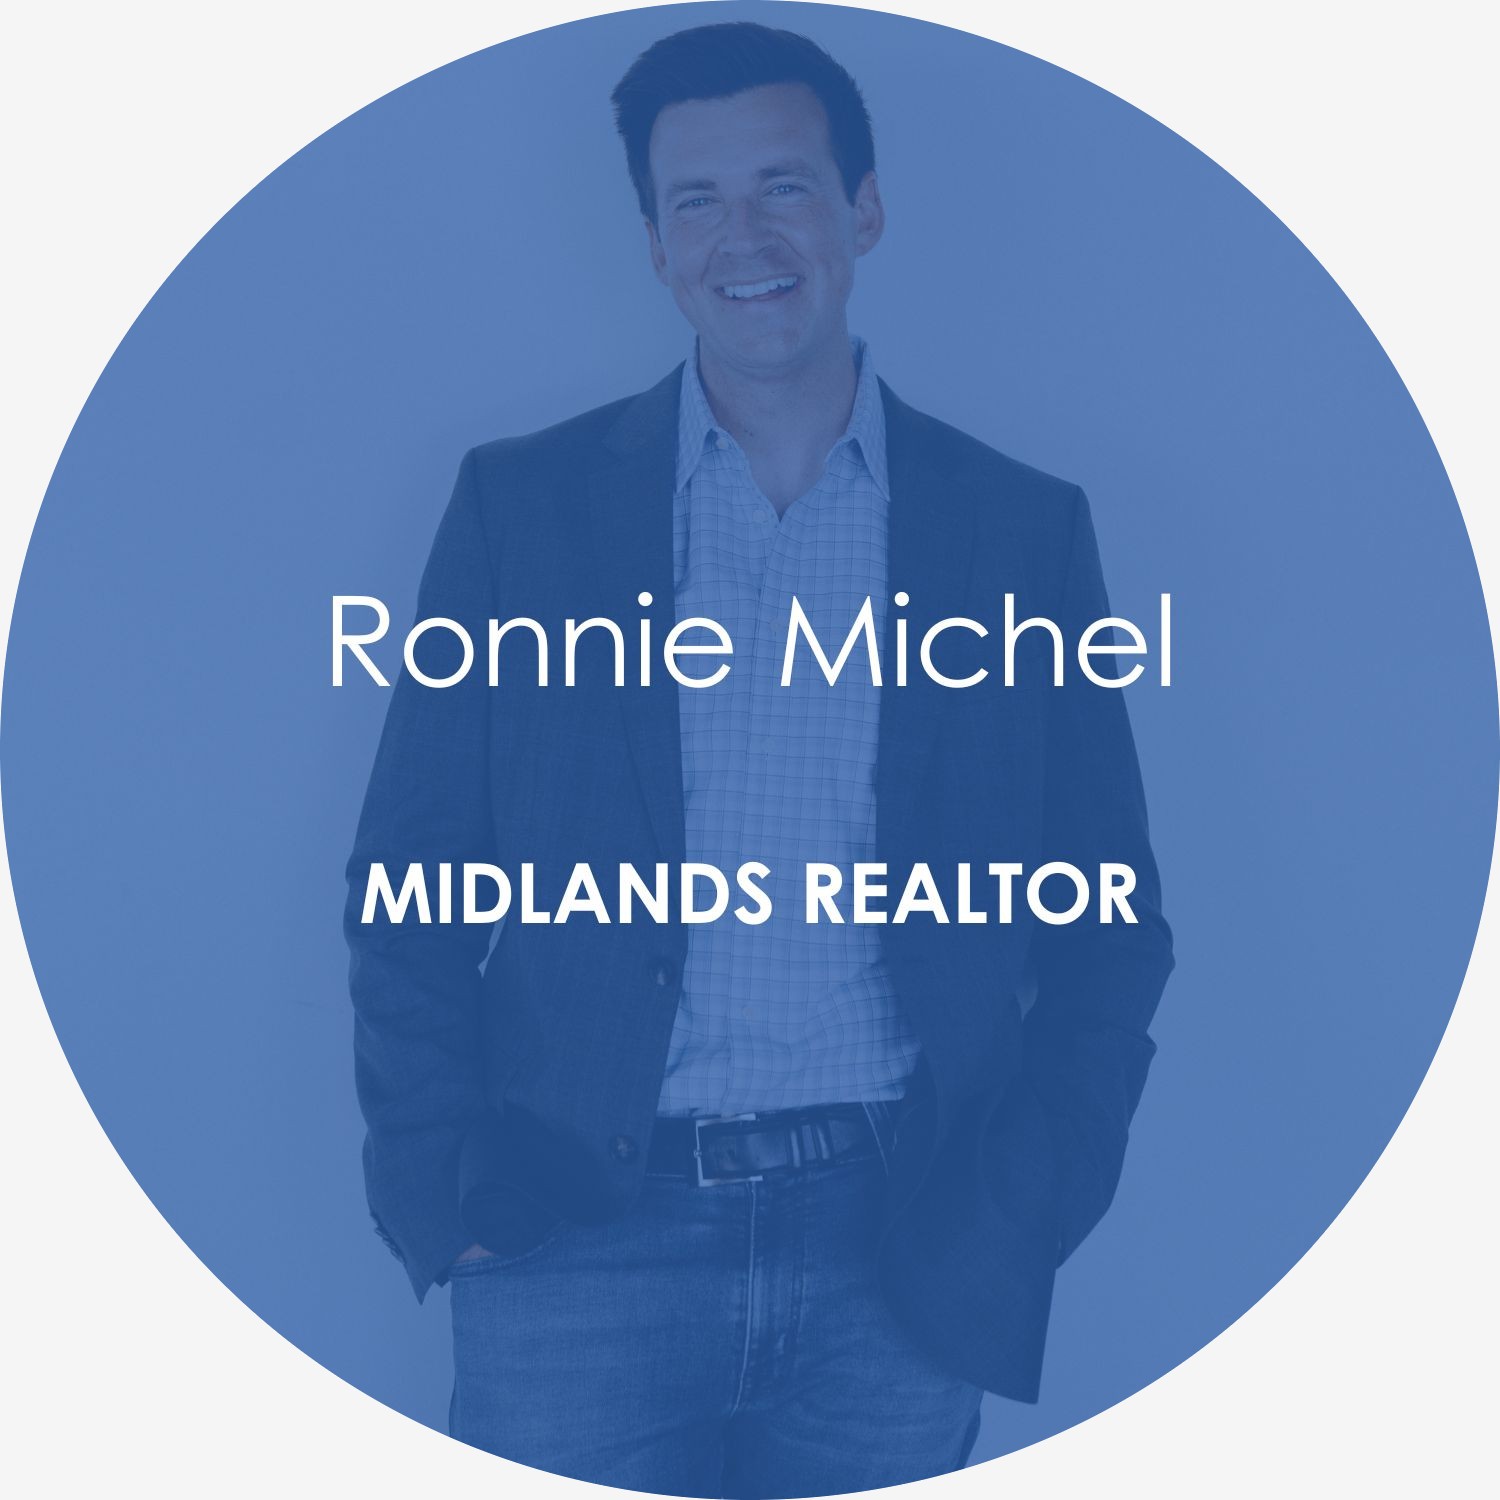 Ronnie Michel – Midlands realtor